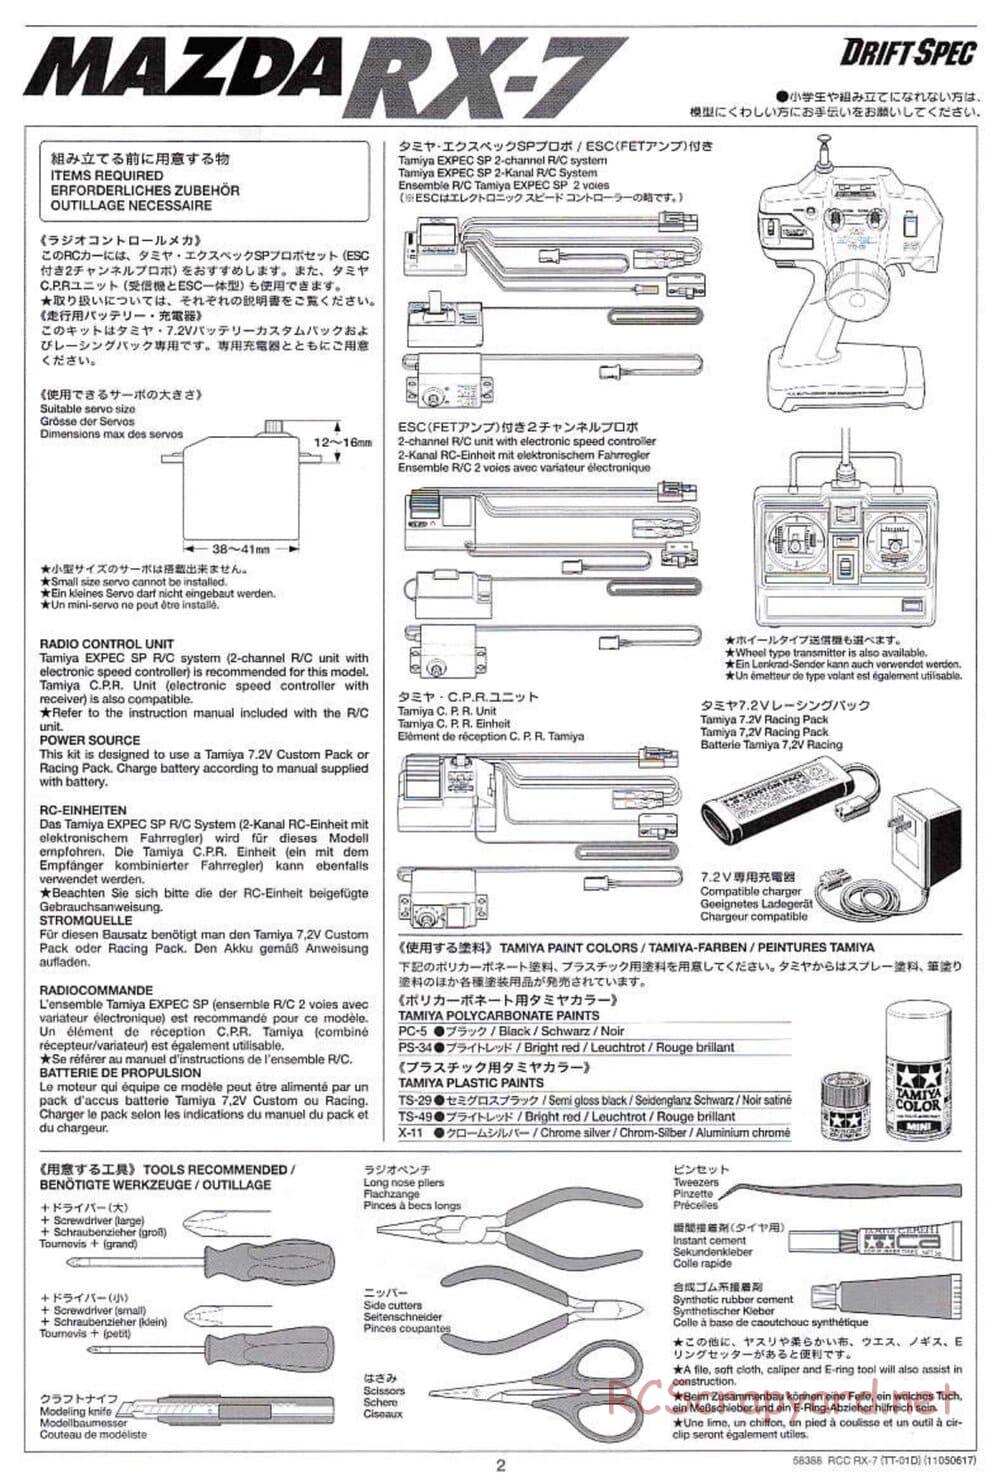 Tamiya - Mazda RX-7 - Drift Spec - TT-01D Chassis - Manual - Page 2